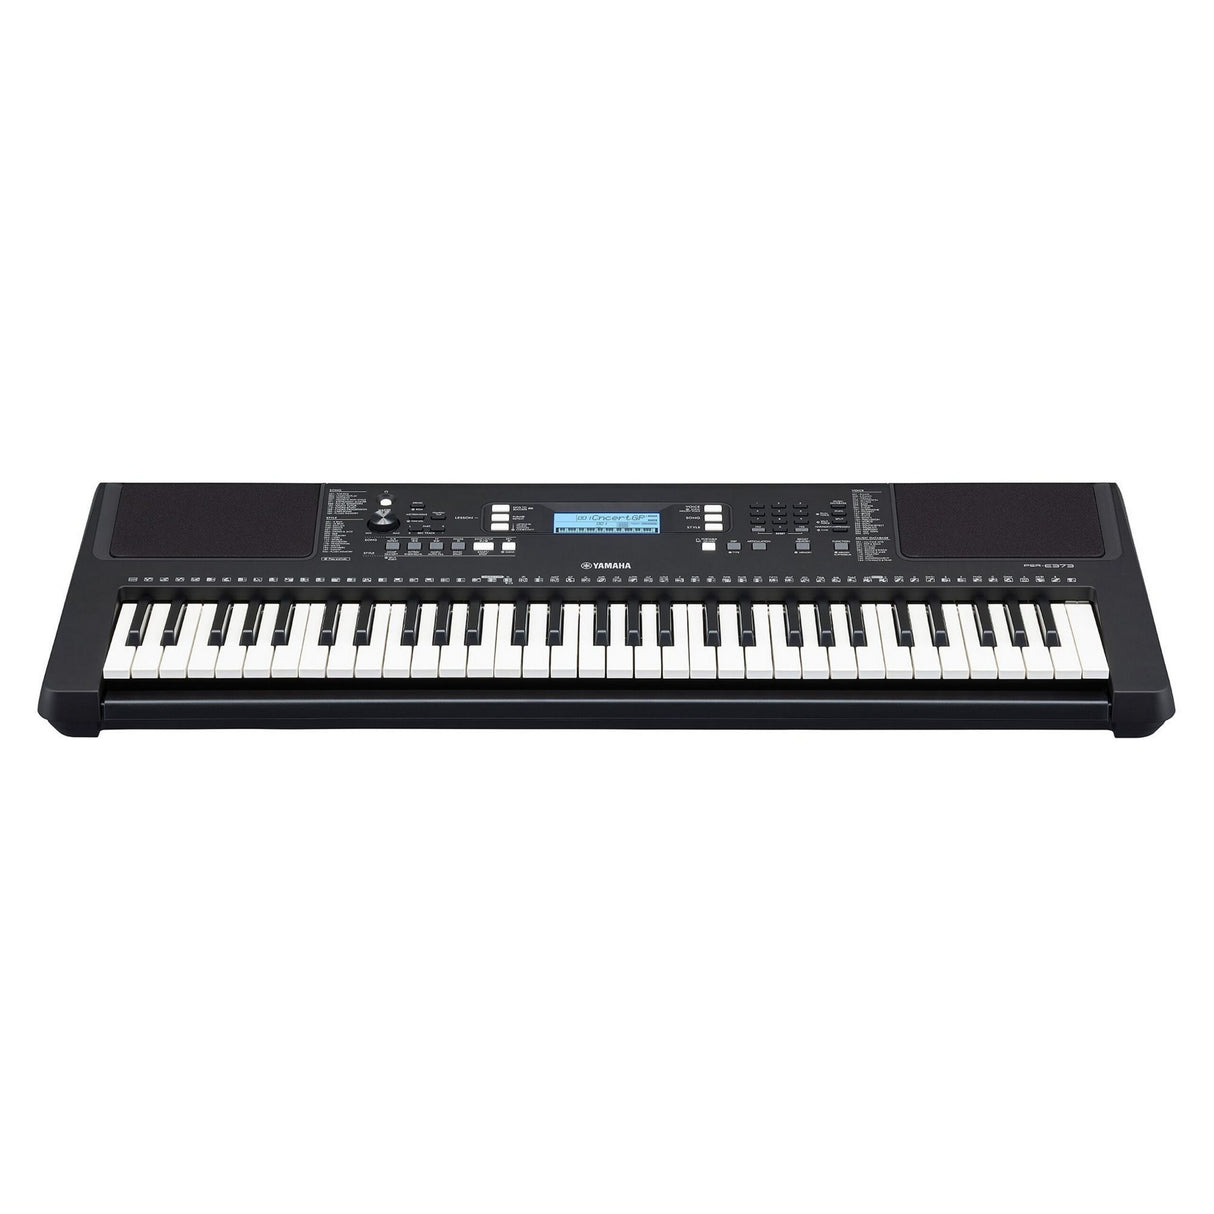 Yamaha PSRE373AD 61-Keys Portable Keyboard with PA130 Power Adapter